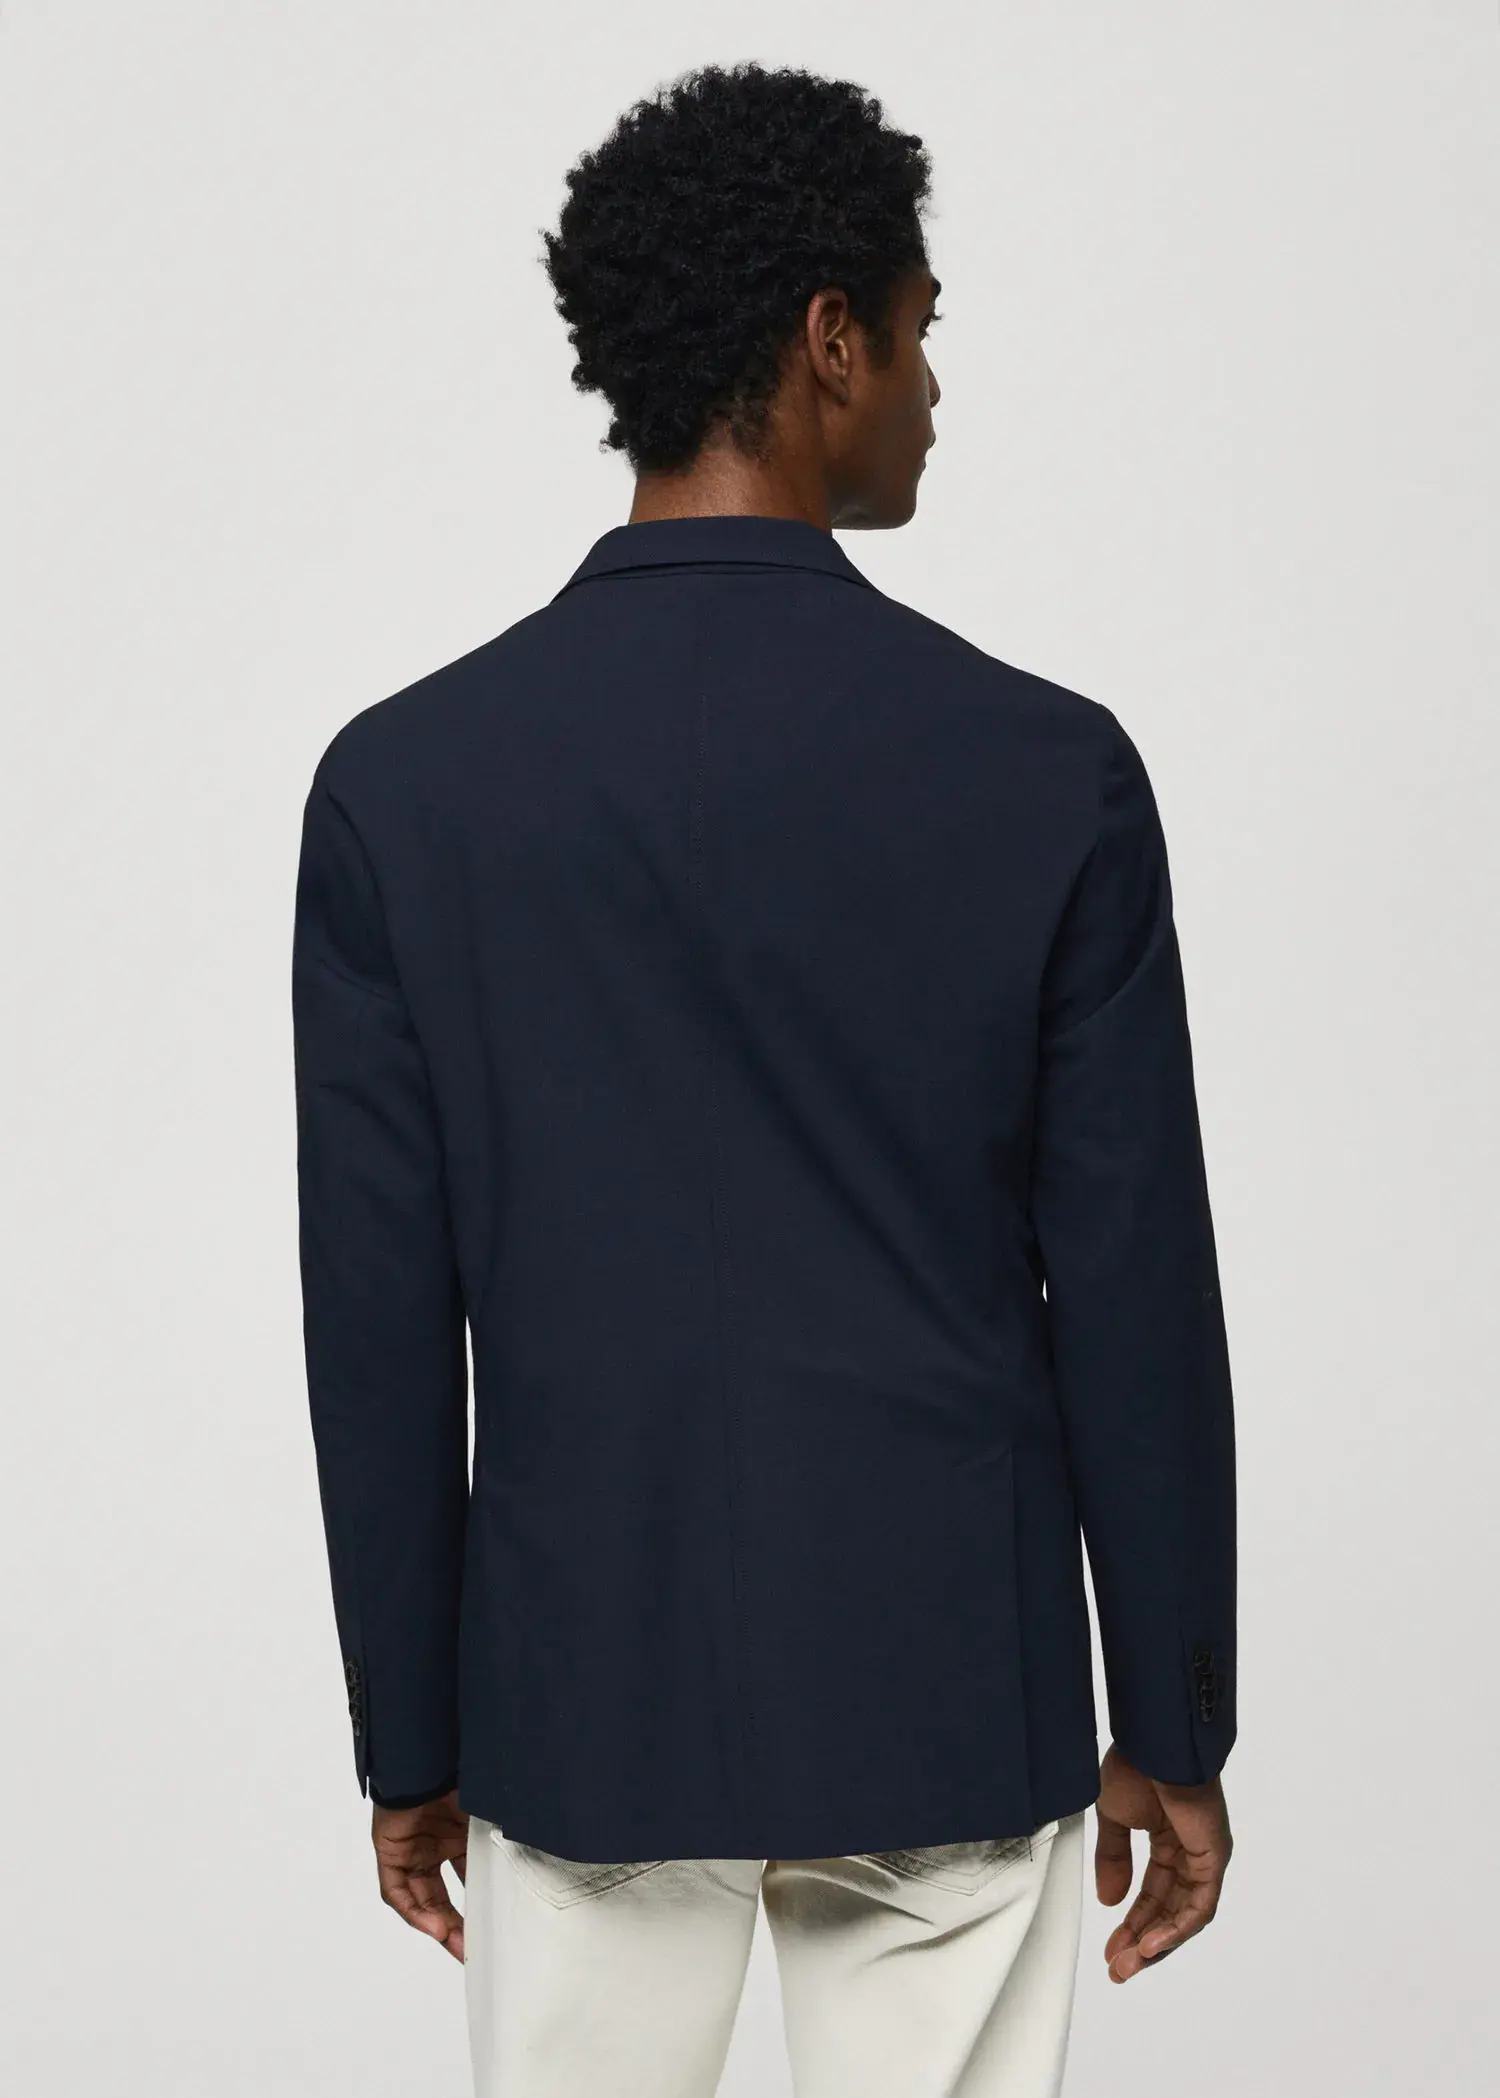 Mango Slim-fit suit blazer. 3